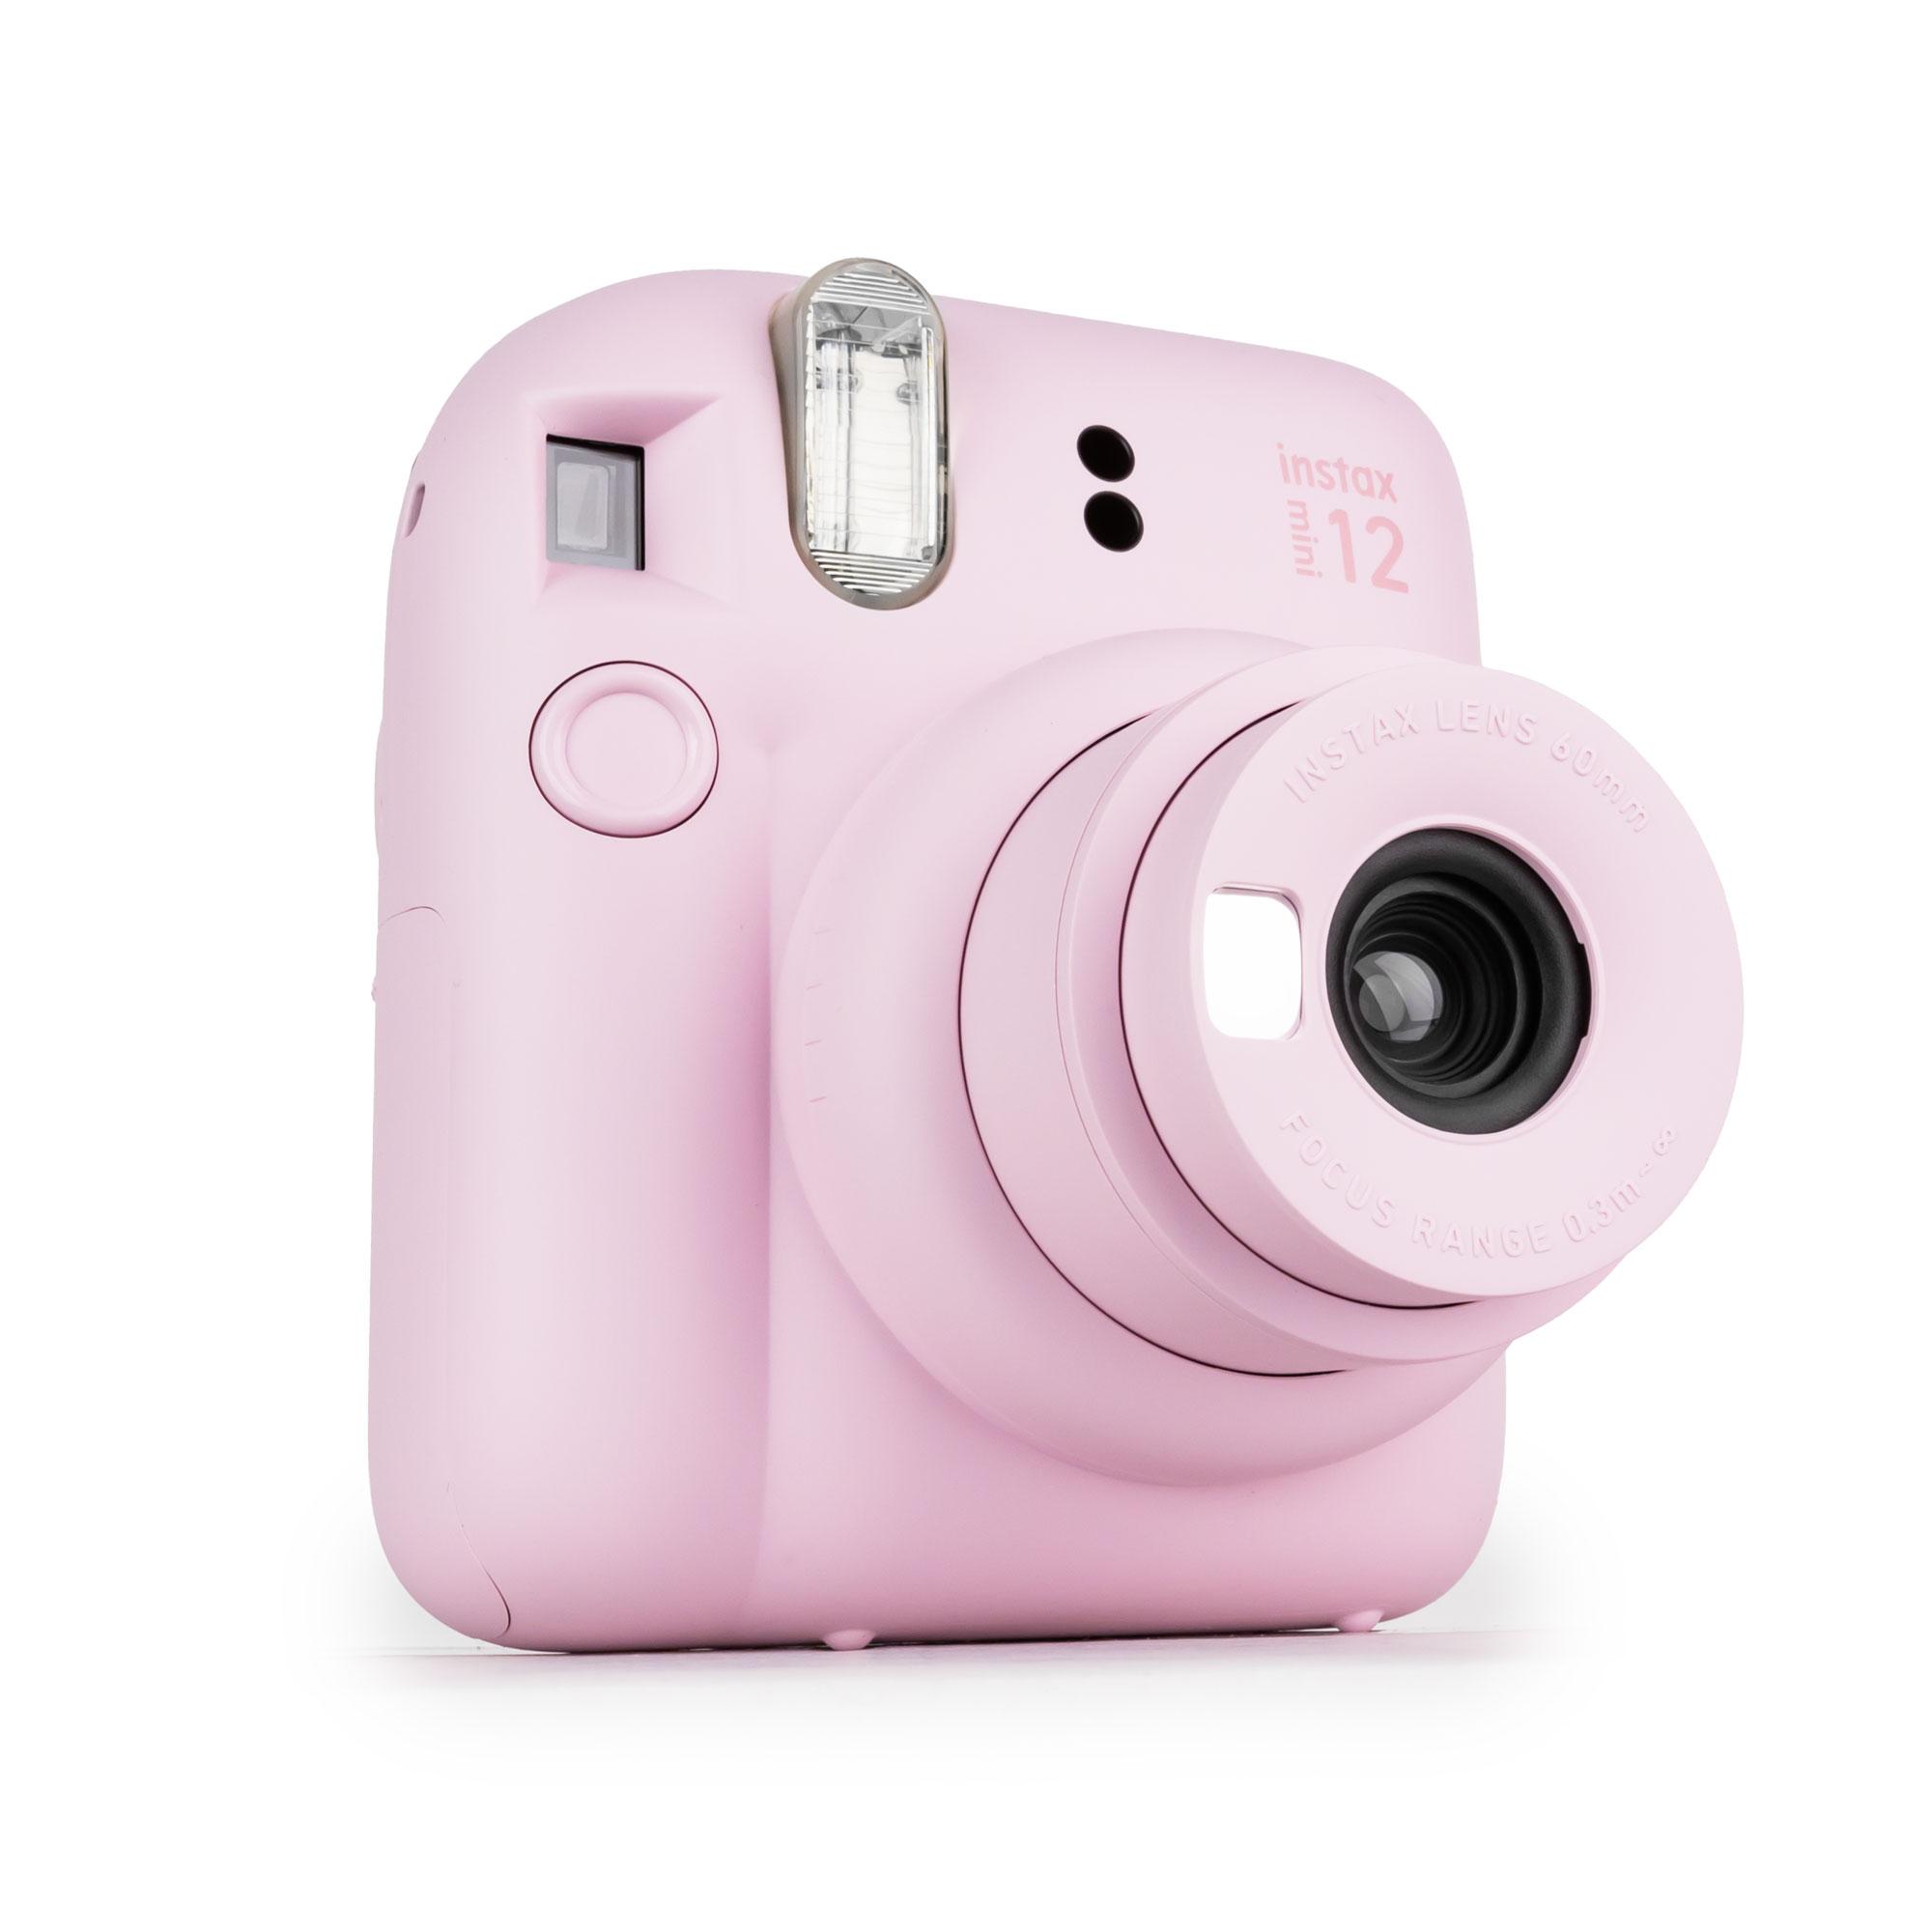 | blossom Instax Mini | Kameras pink Photo | Kamera Lang | Sofortbildkamera Instax 12 Fuji